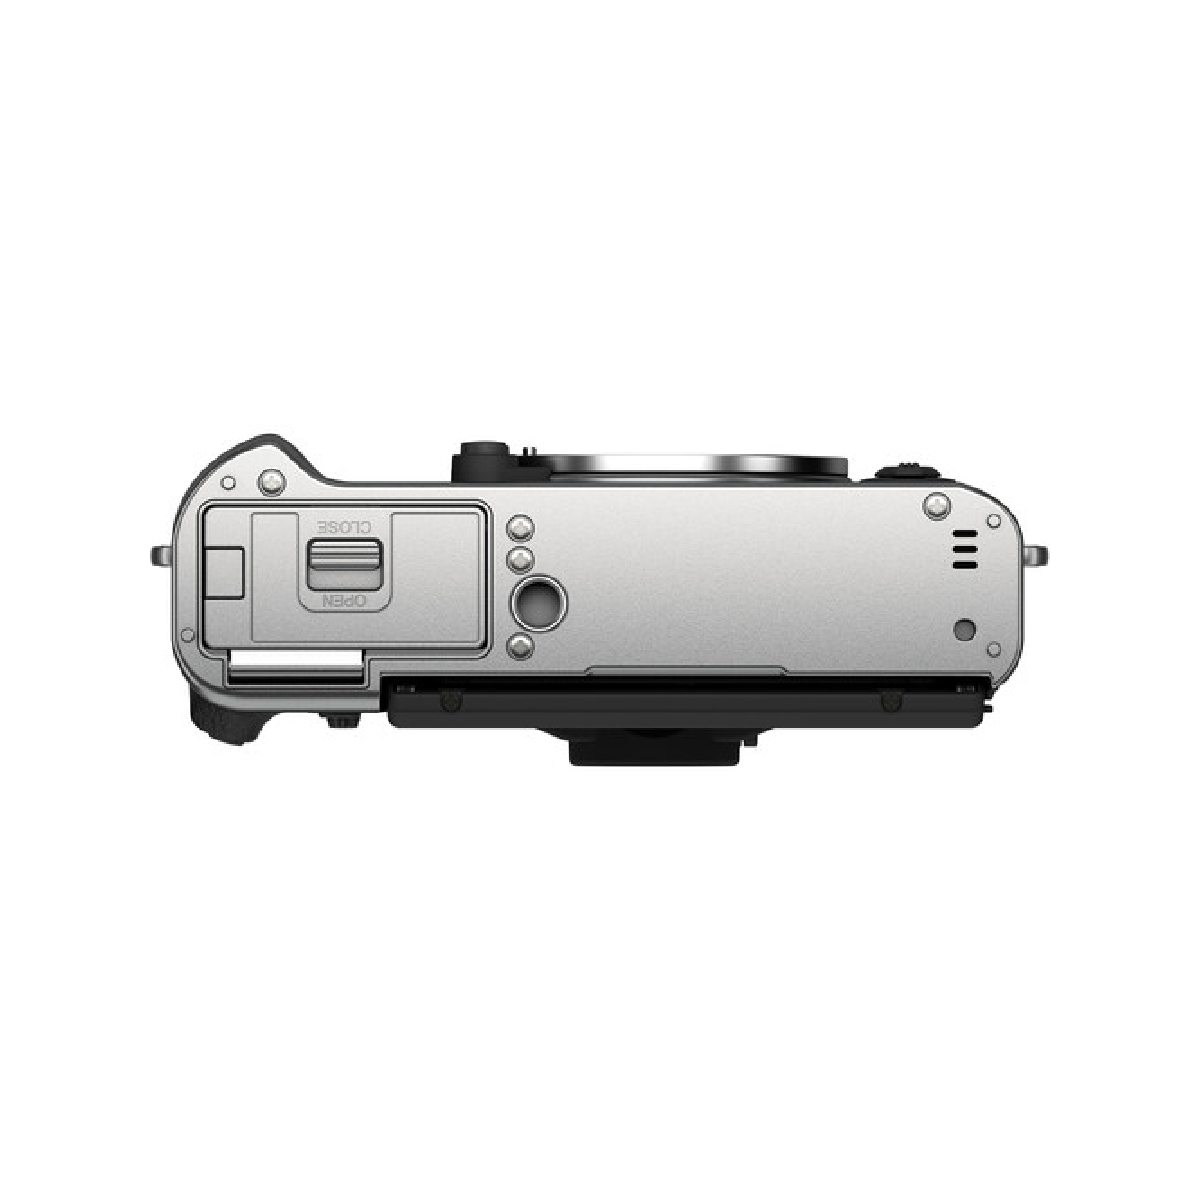 Fujifilm X-T30 II Camera Body With XF15-45mm Lens – Silver (8)